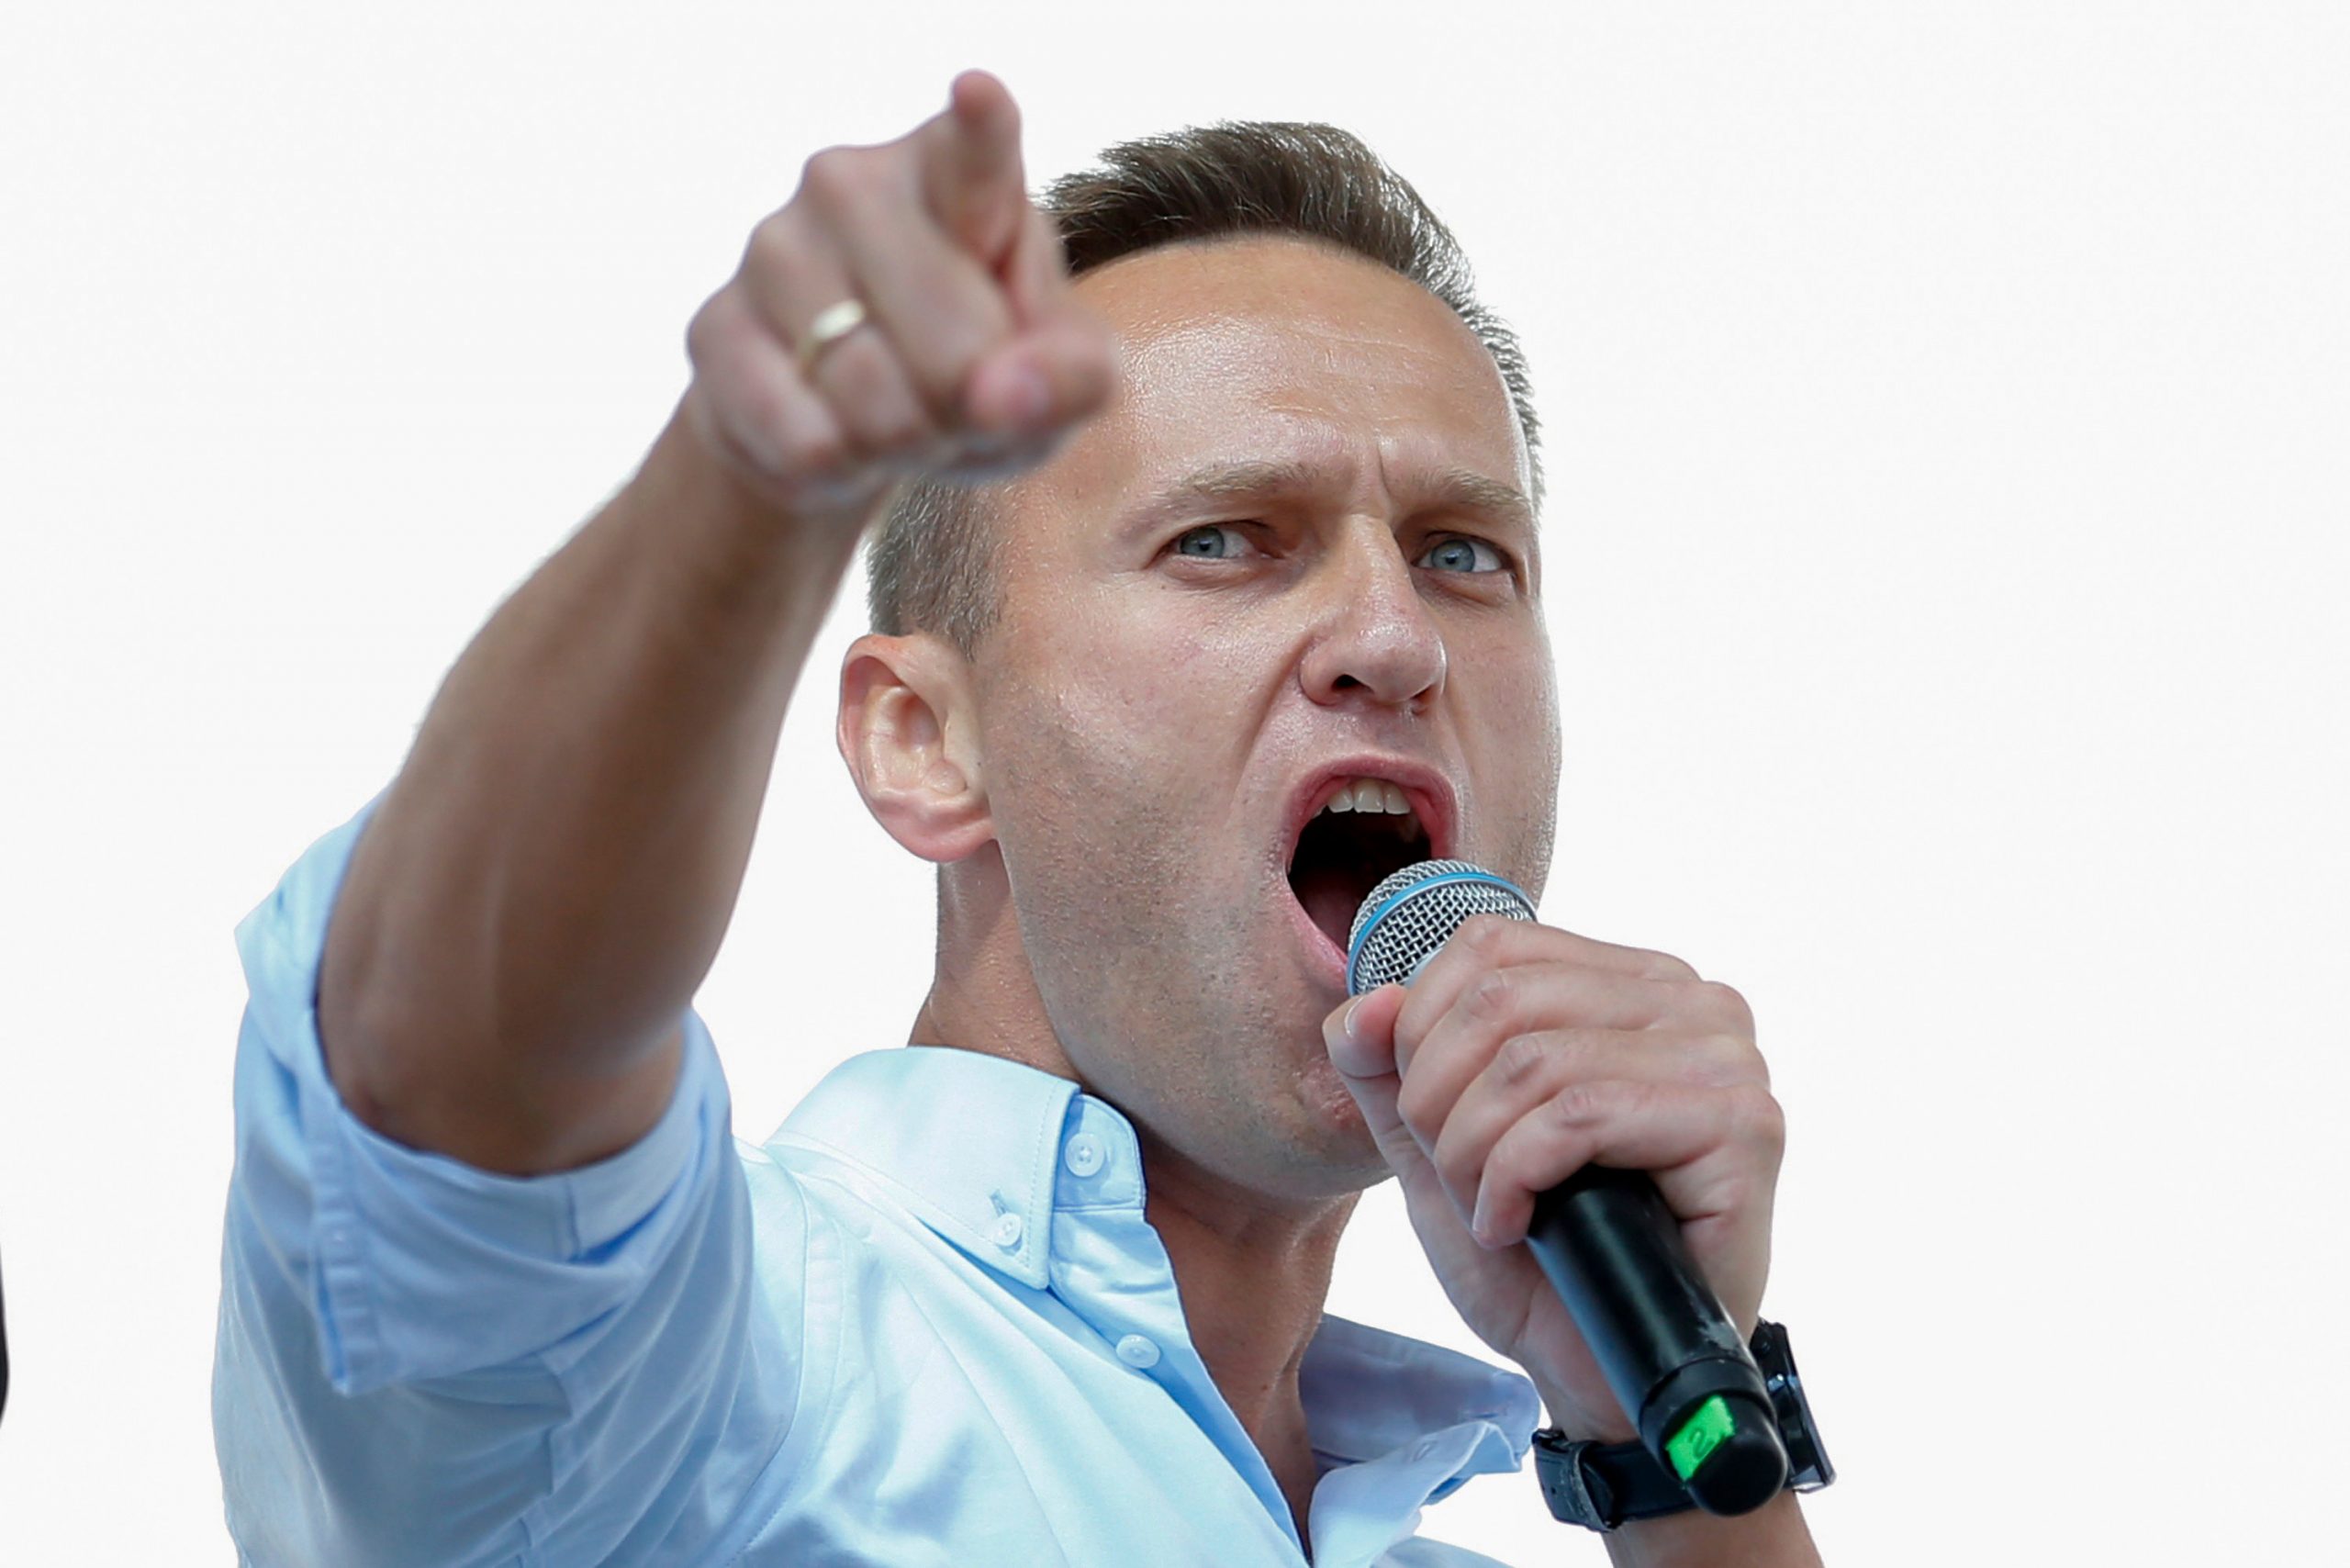 ‘Will have no one to treat’. Doctors urge Putin critic Navalny to halt hunger strike